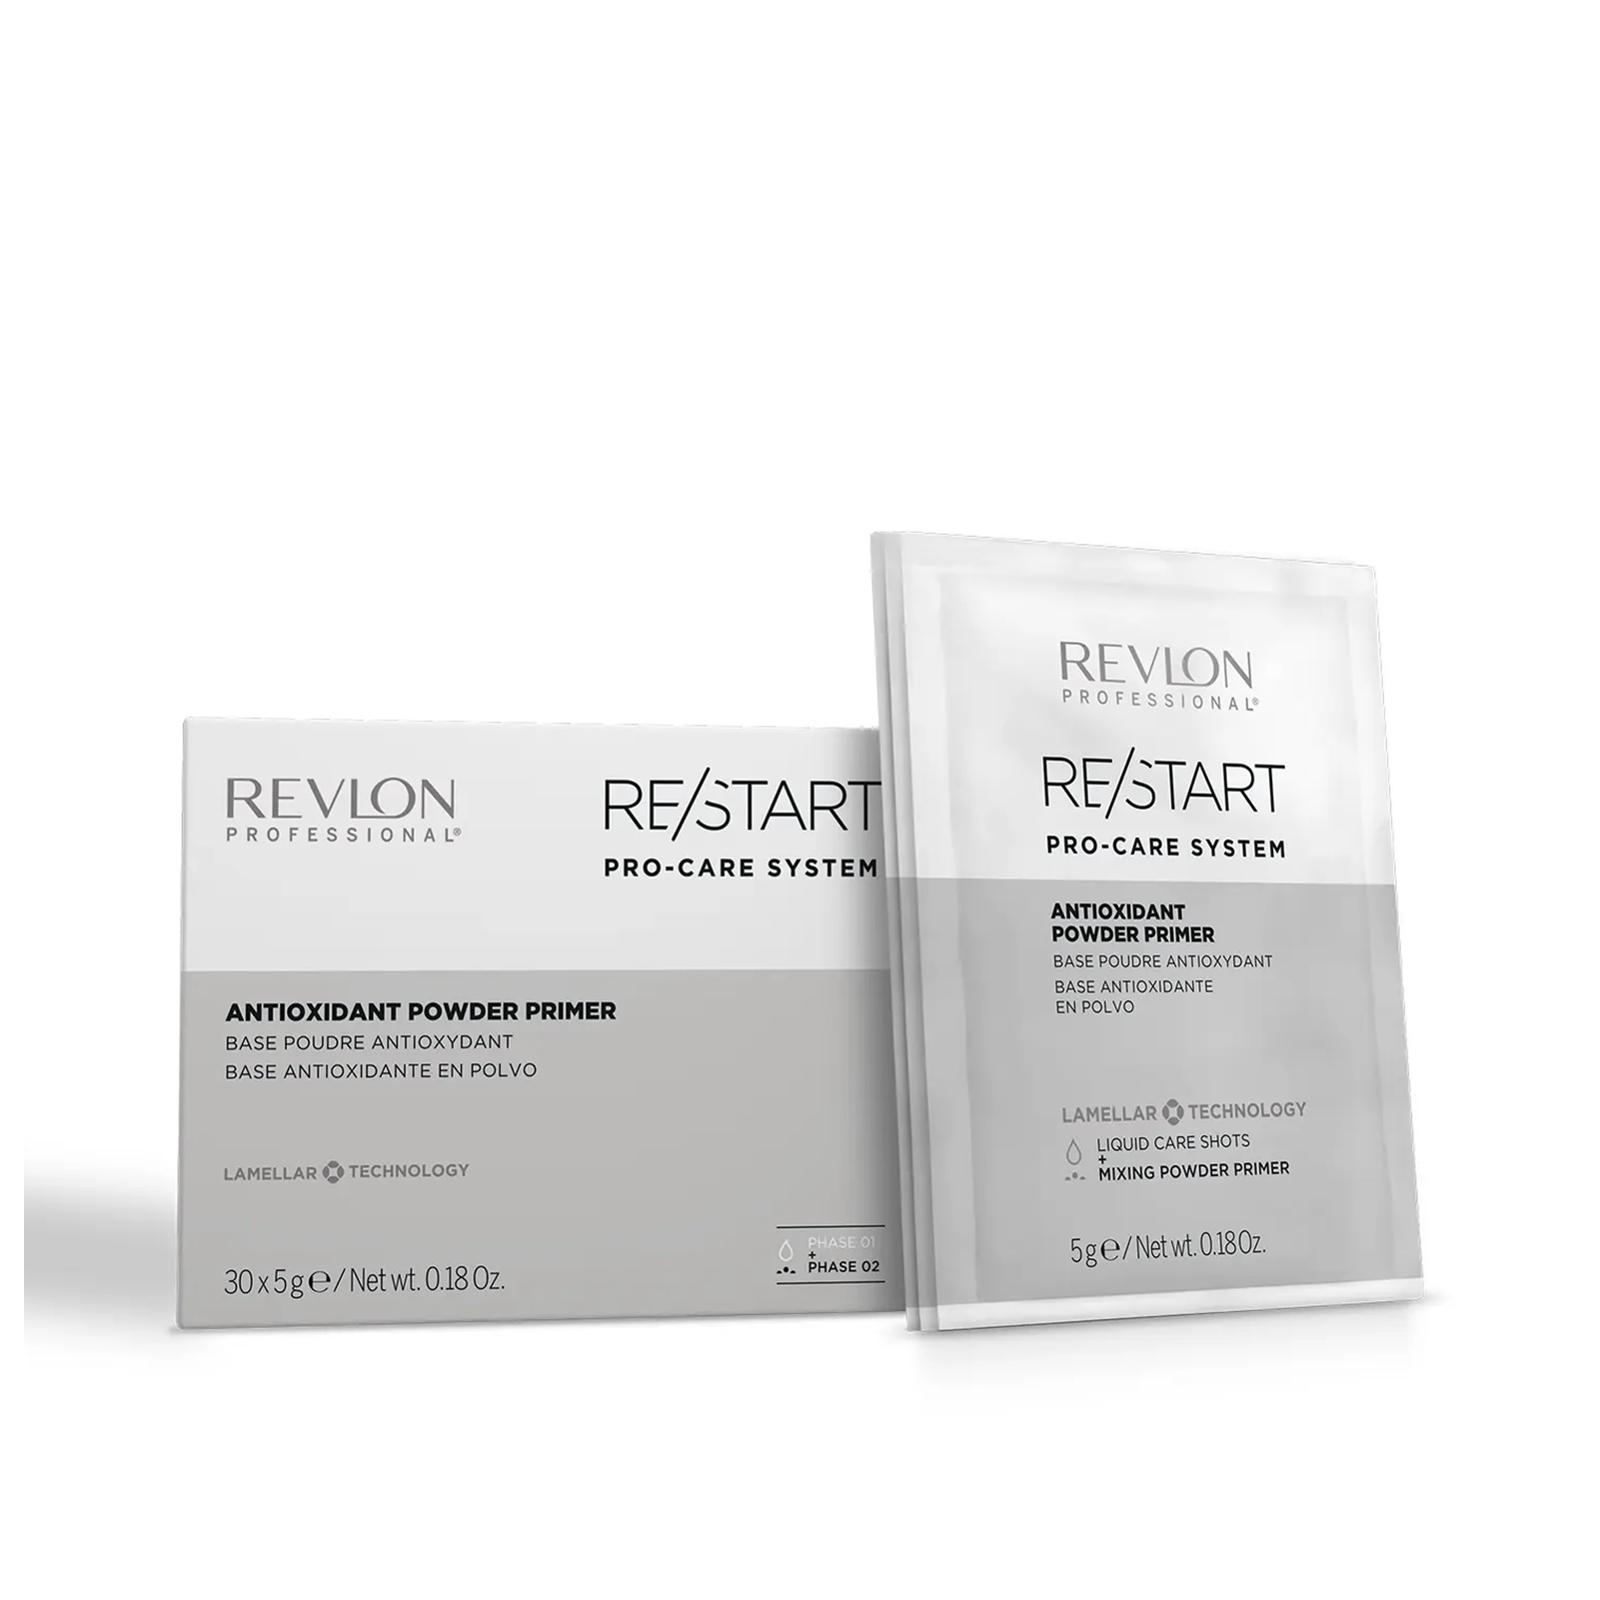 Revlon Professional Re/Start Pro-Care System Antioxidant Powder Primer 30x5g